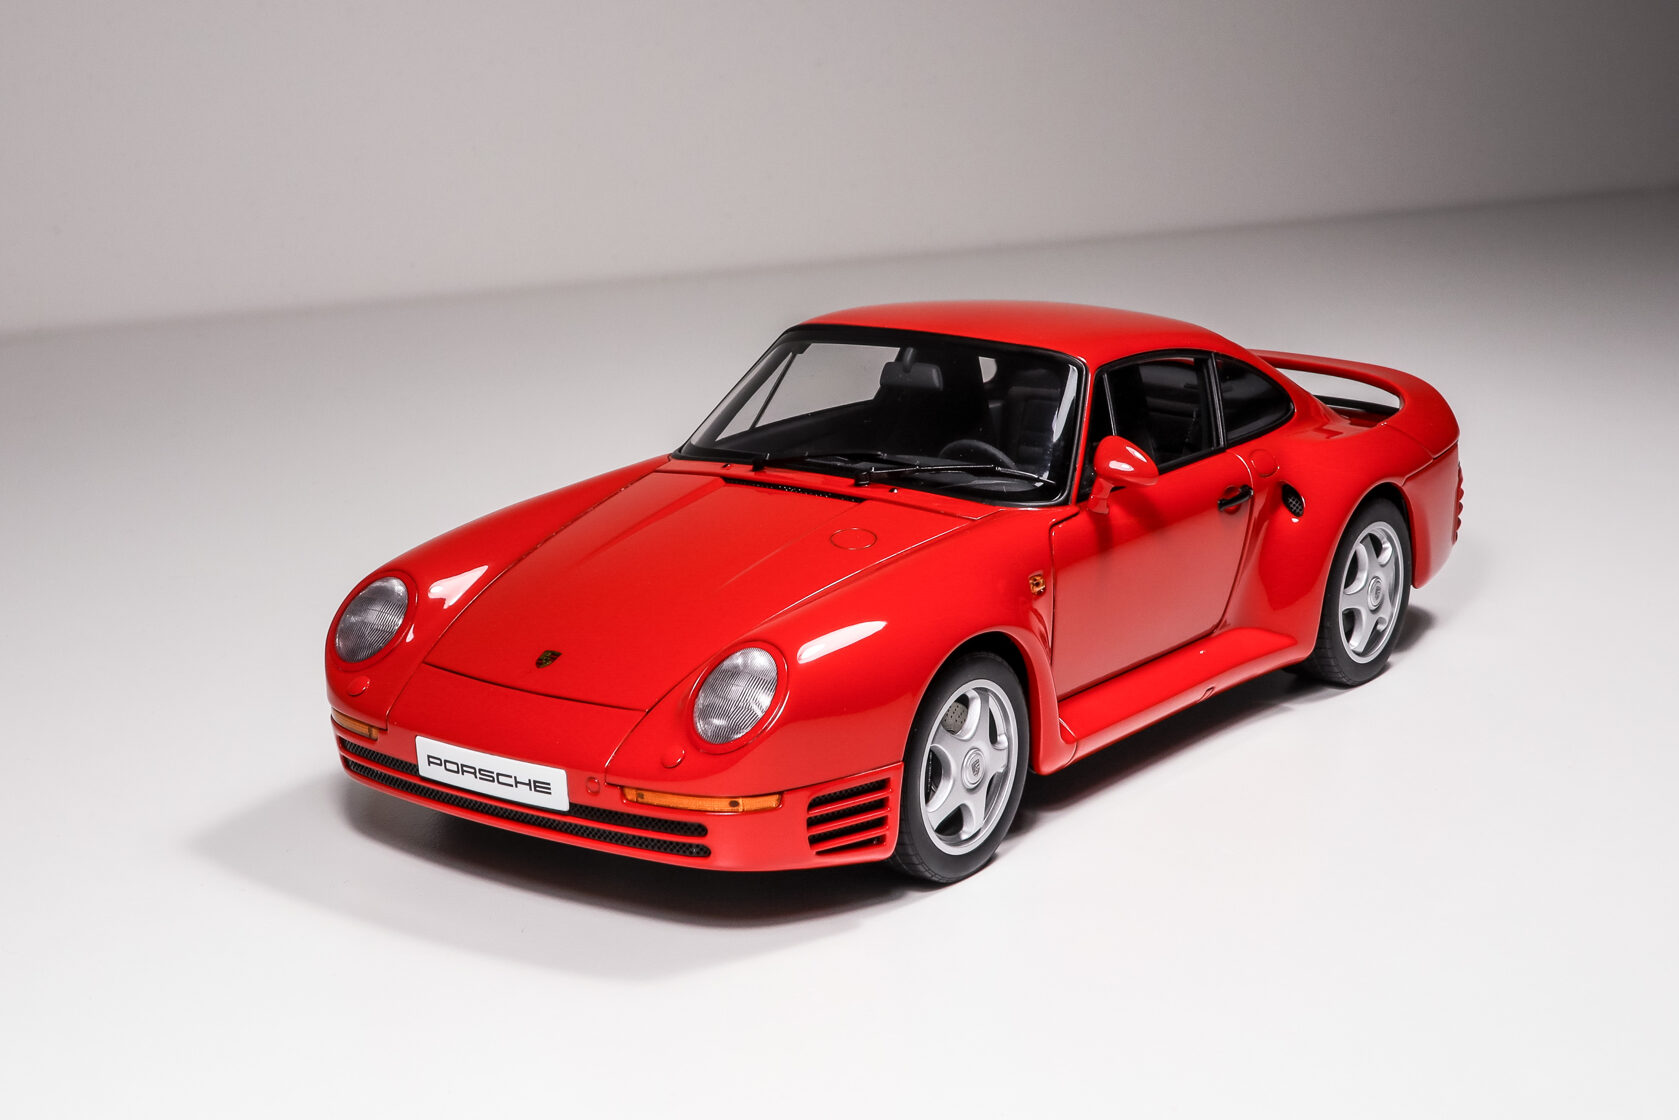 Porsche 959 Guards Red 1:18 scale model by Autoart